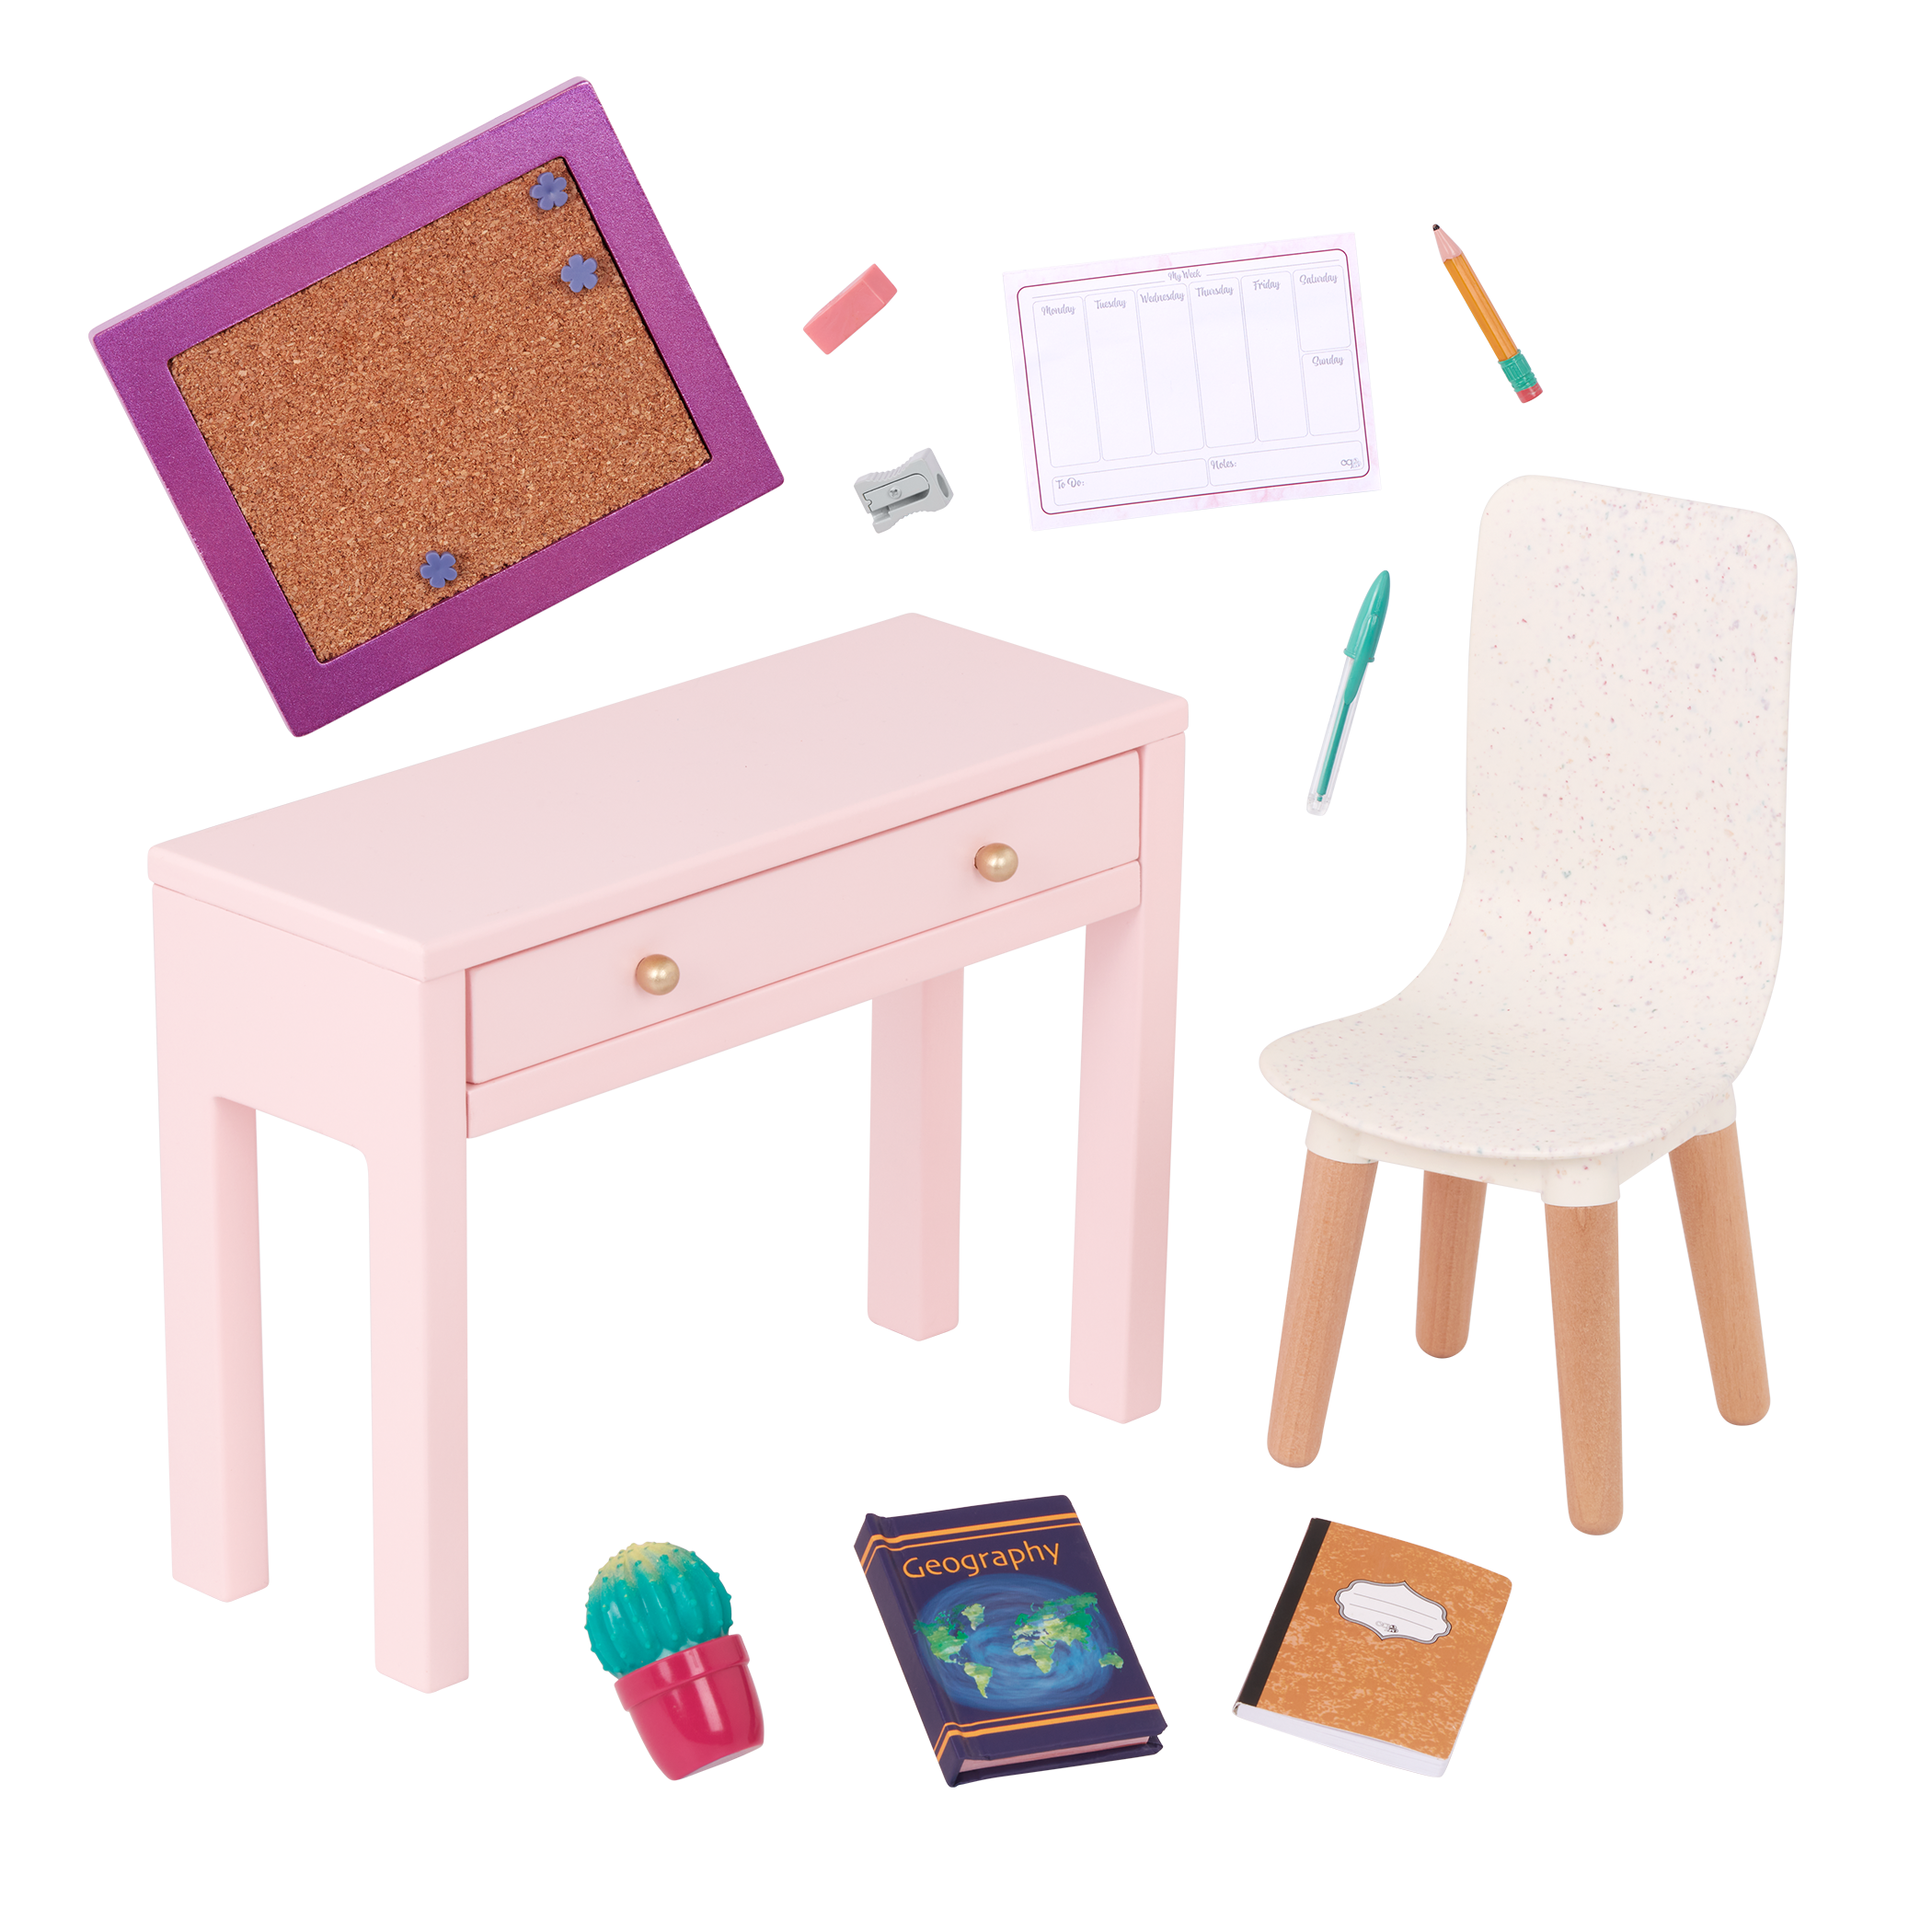 Our Generation Working Wonder Desk Furniture for 18-inch Dolls 